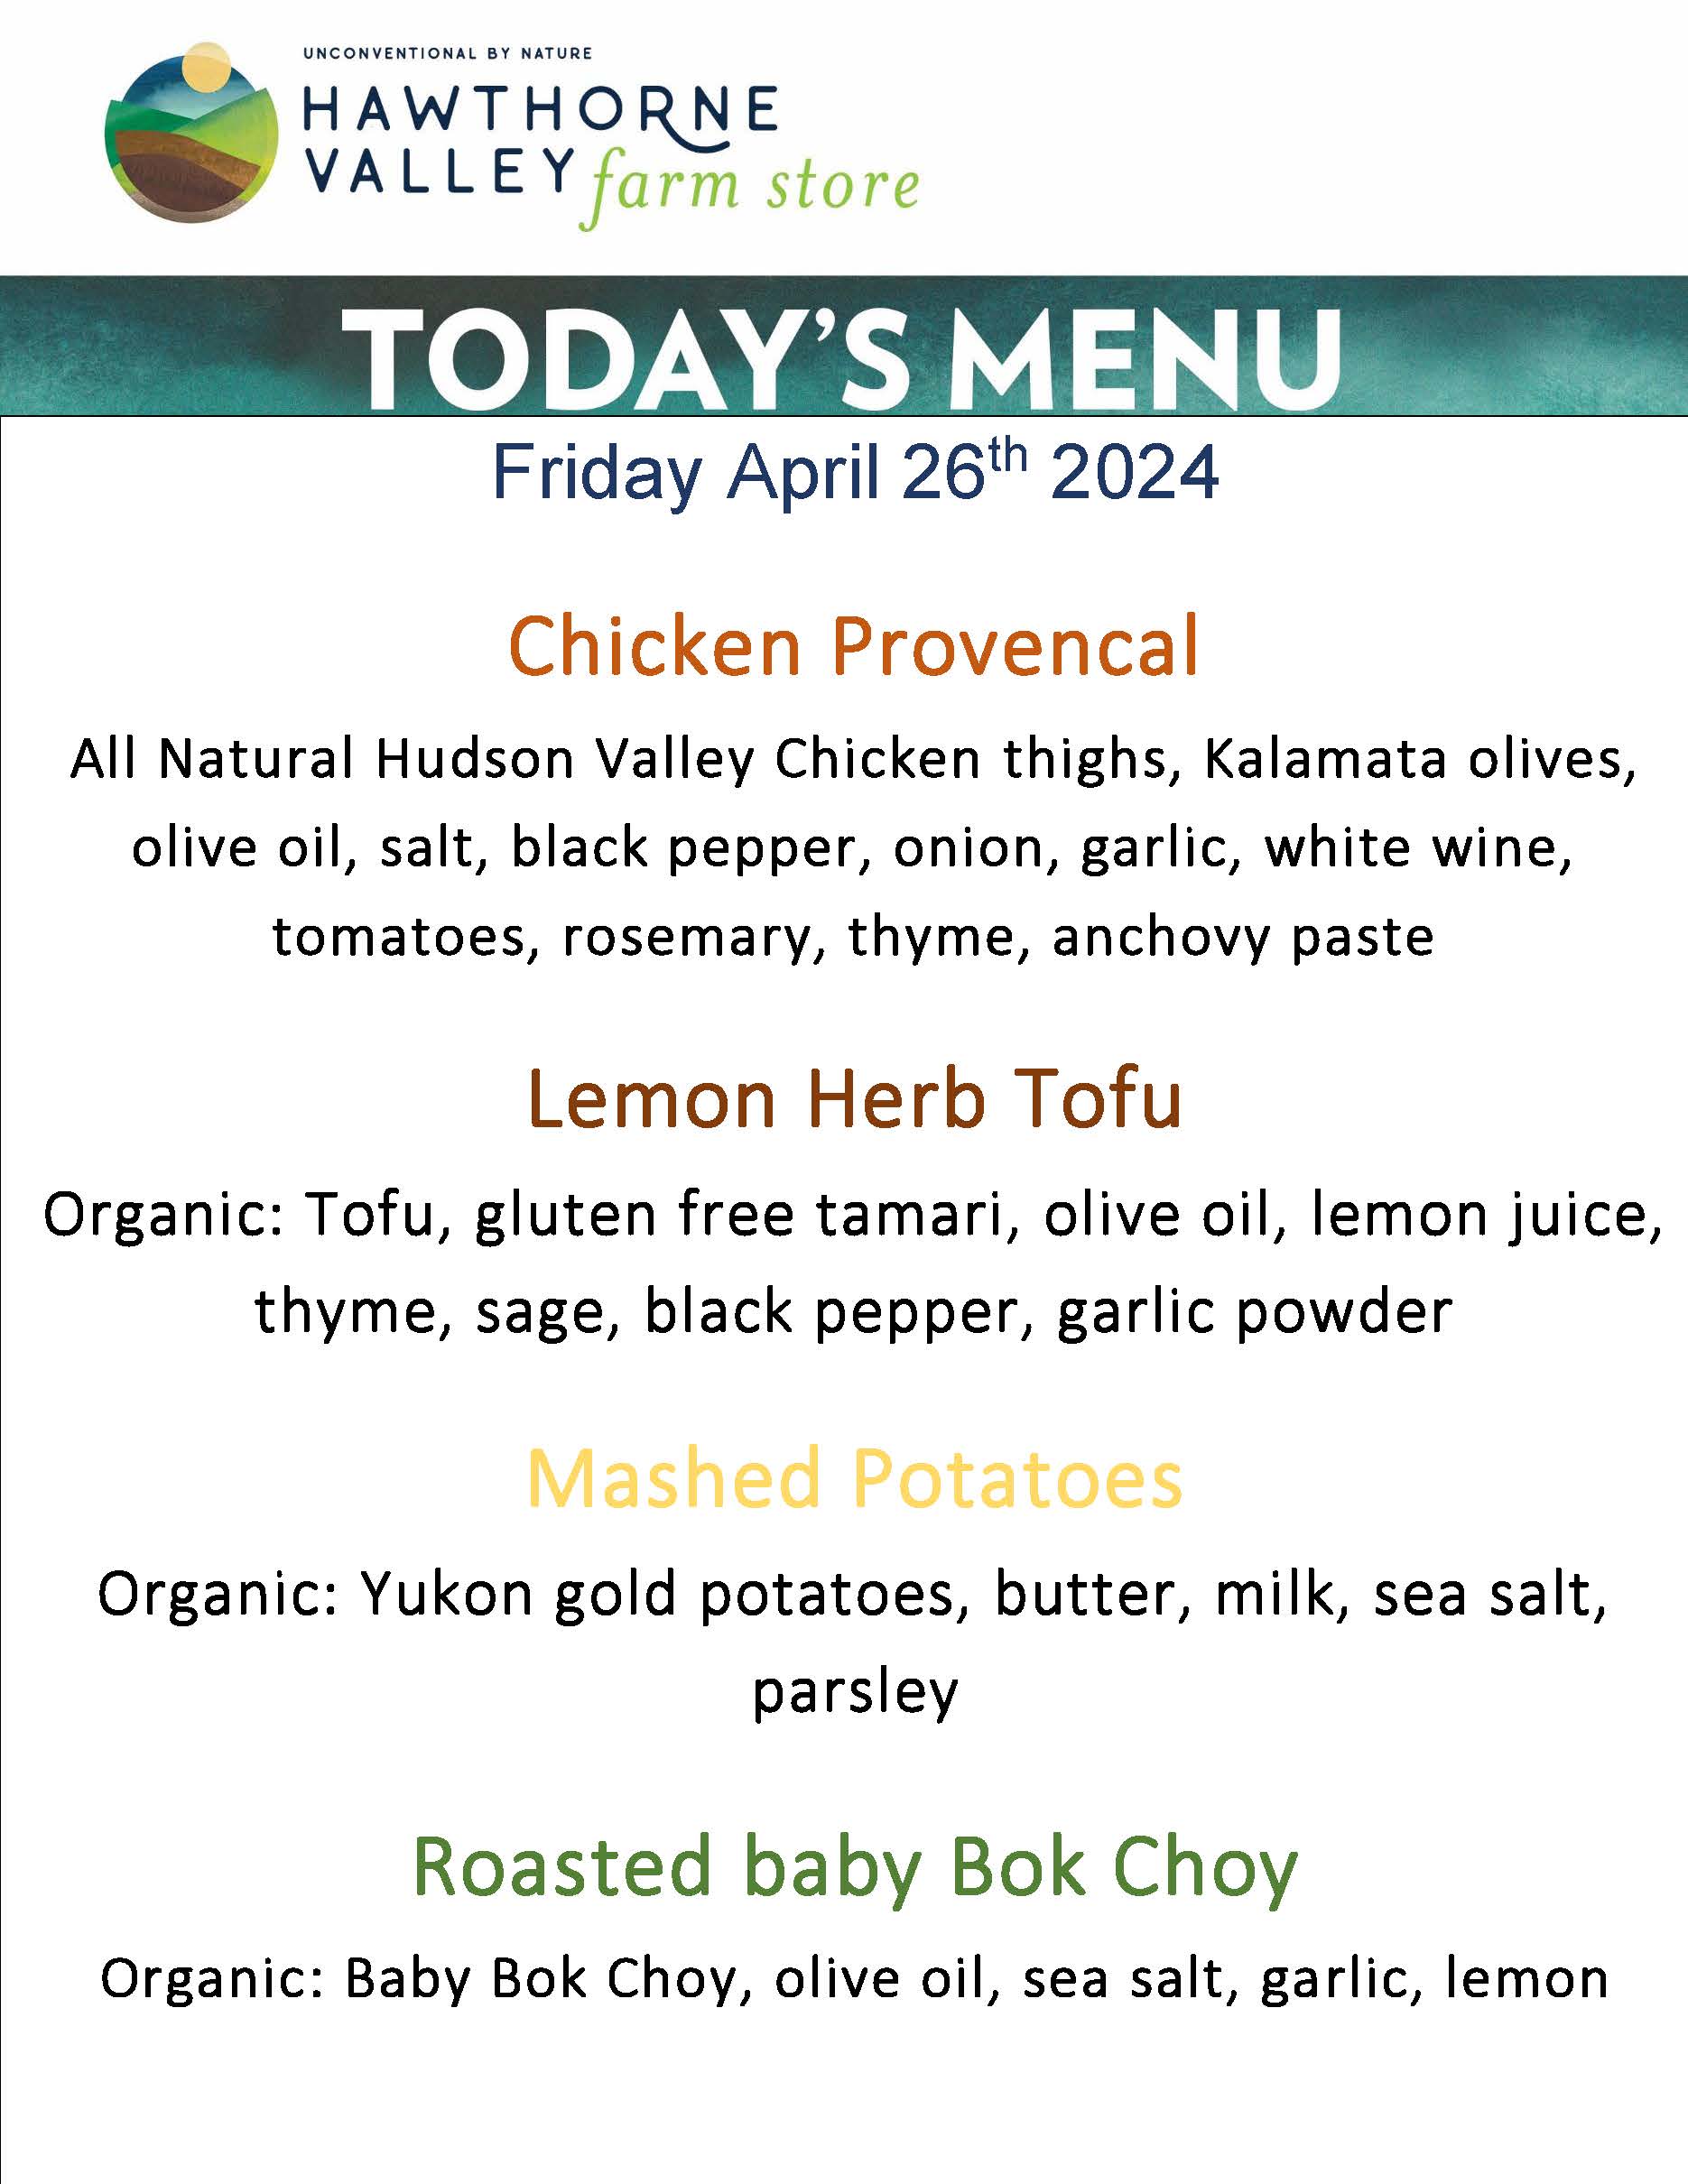 Friday April 26 menu. Chicken provencal, lemon herb tofu, mashed potatoes, and roasted baby bok choy